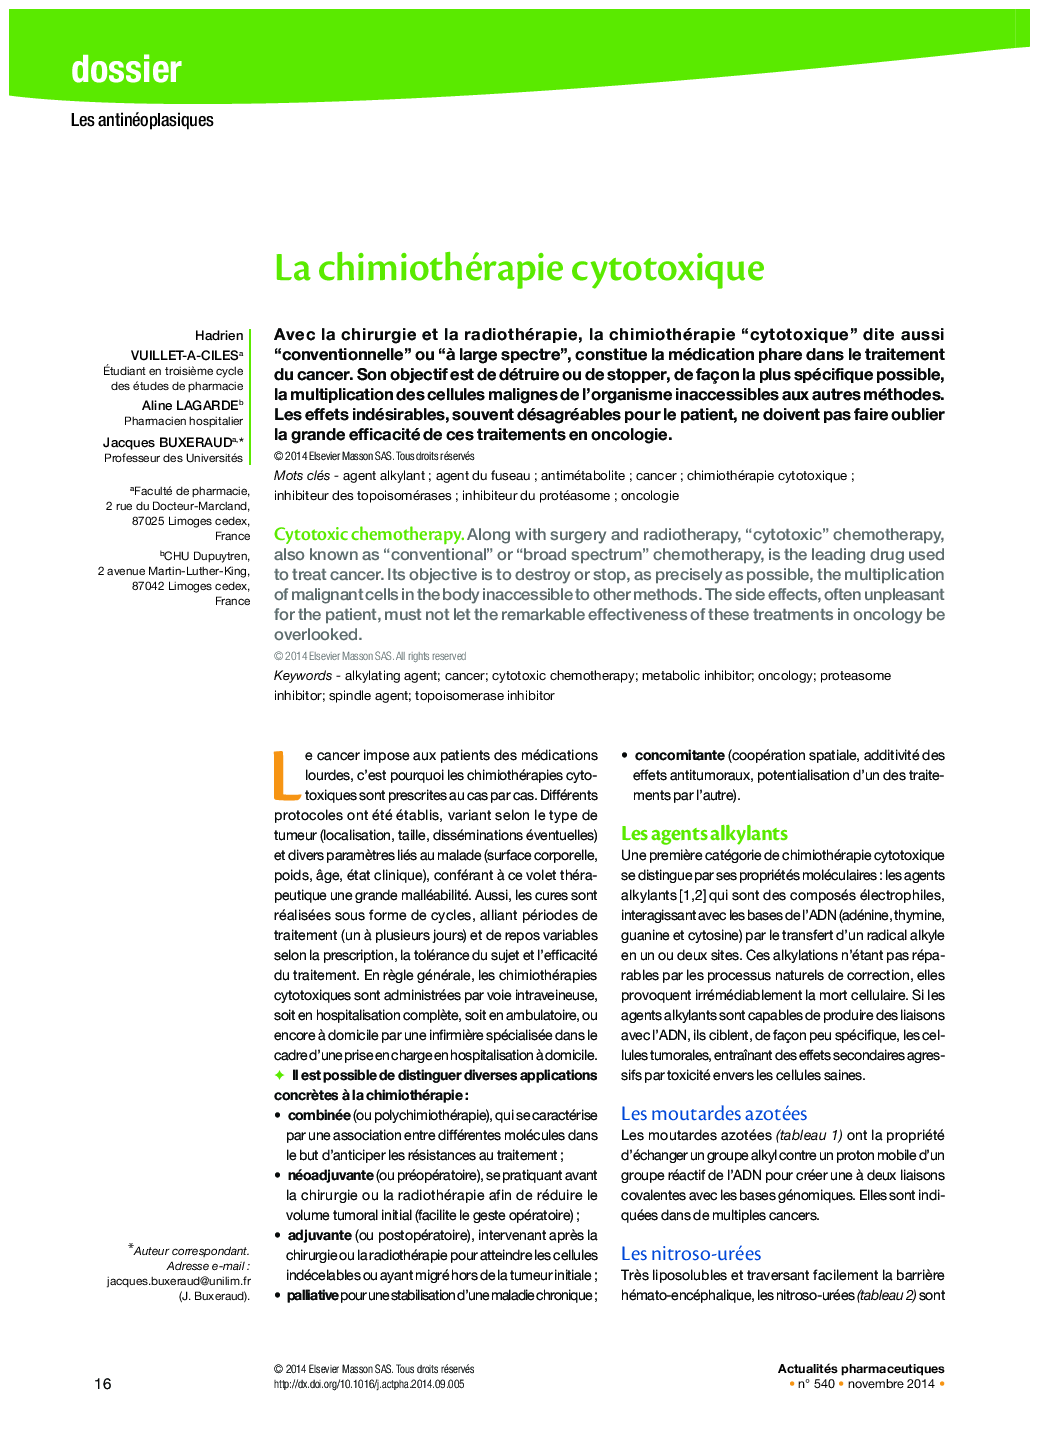 La chimiothérapie cytotoxique